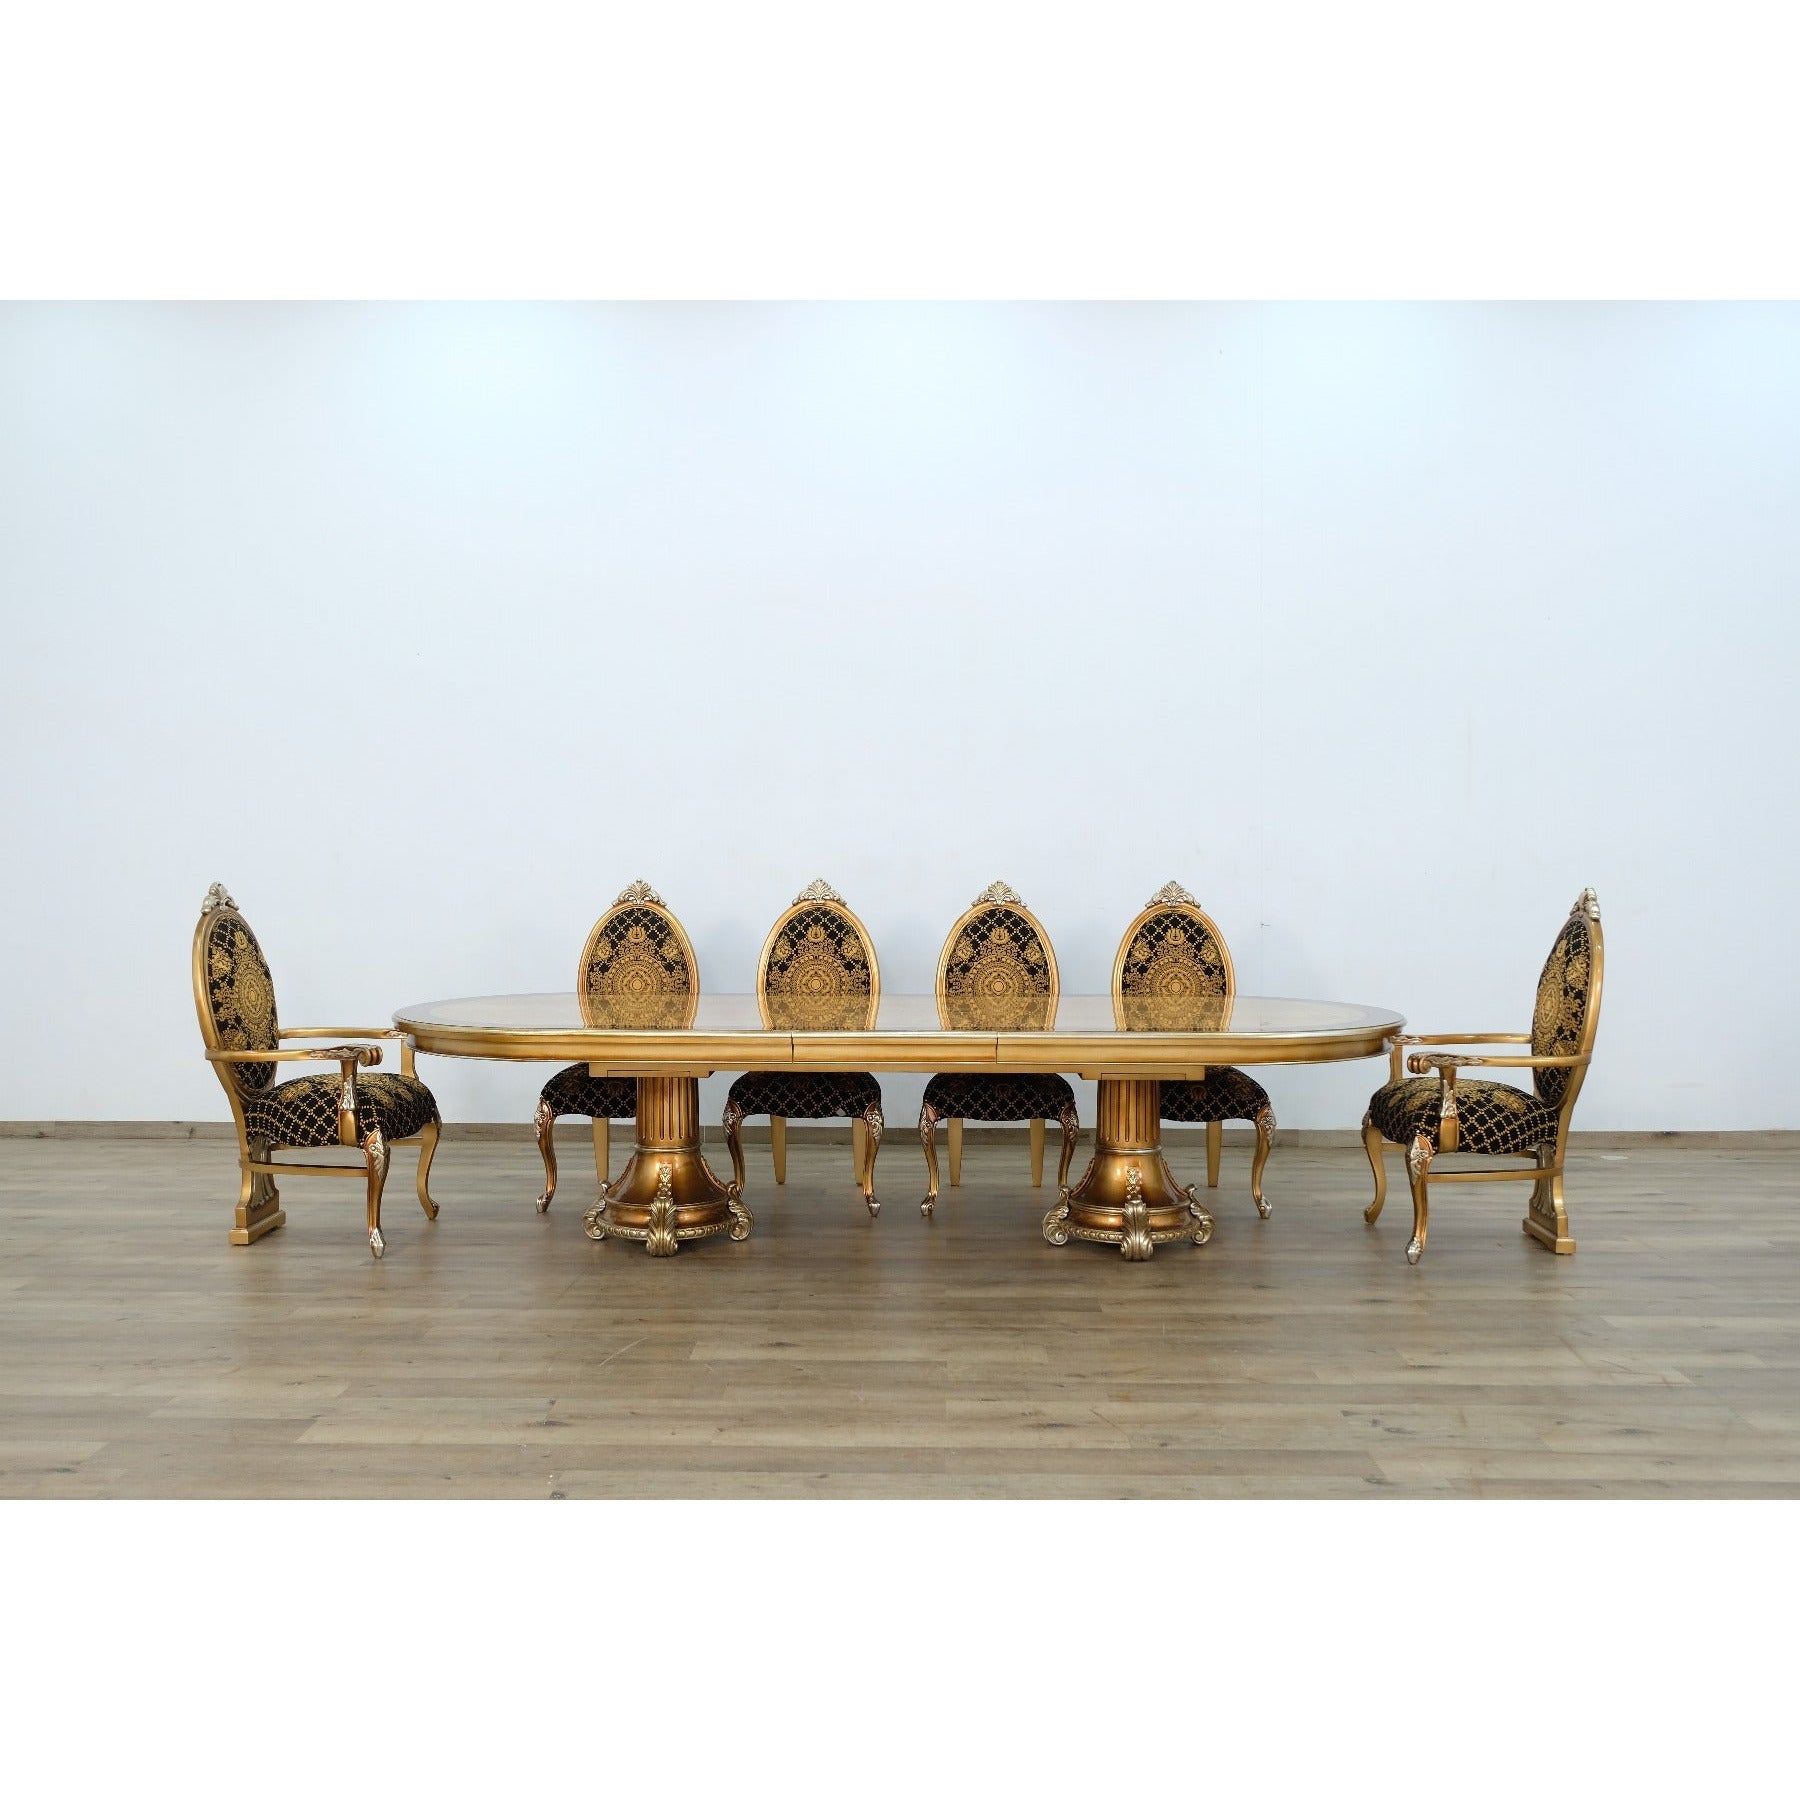 European Furniture - Emperador 5 Piece Dining Room Set in Black and Gold - 42034-5SET - New Star Living